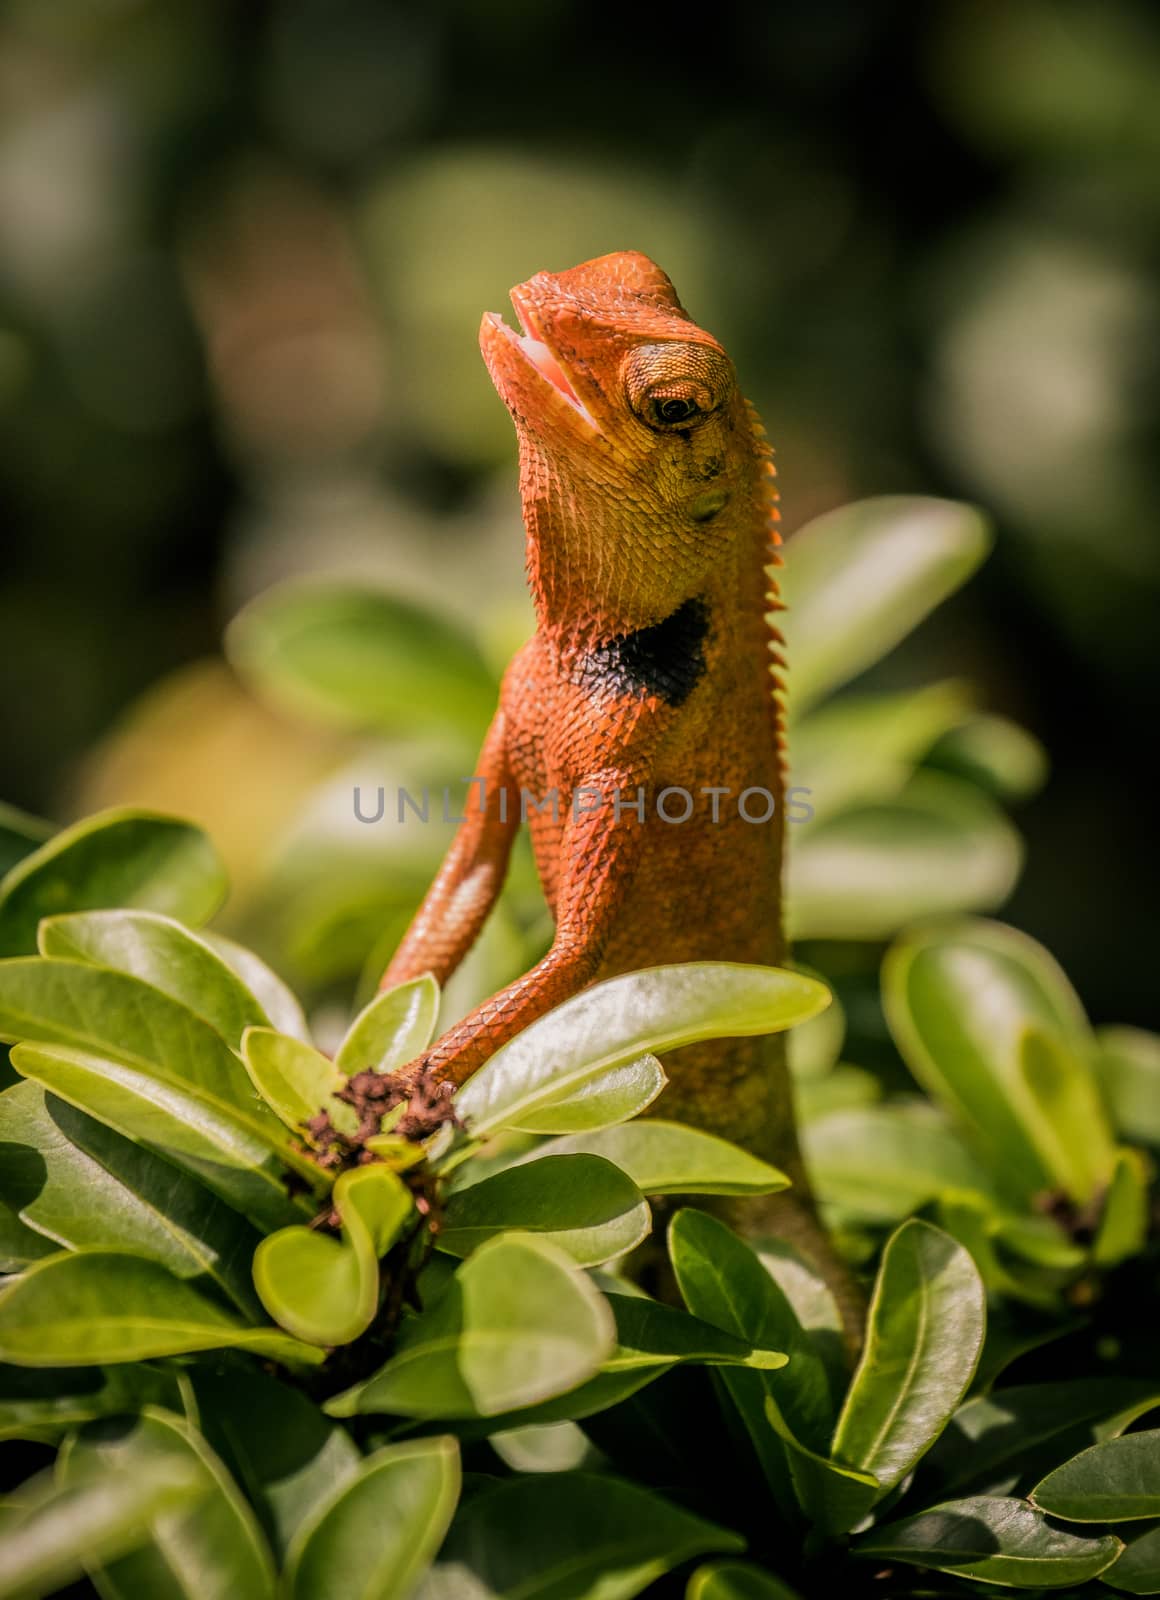 a little orange chameleon on the bush in a garden by Obmeetsworld